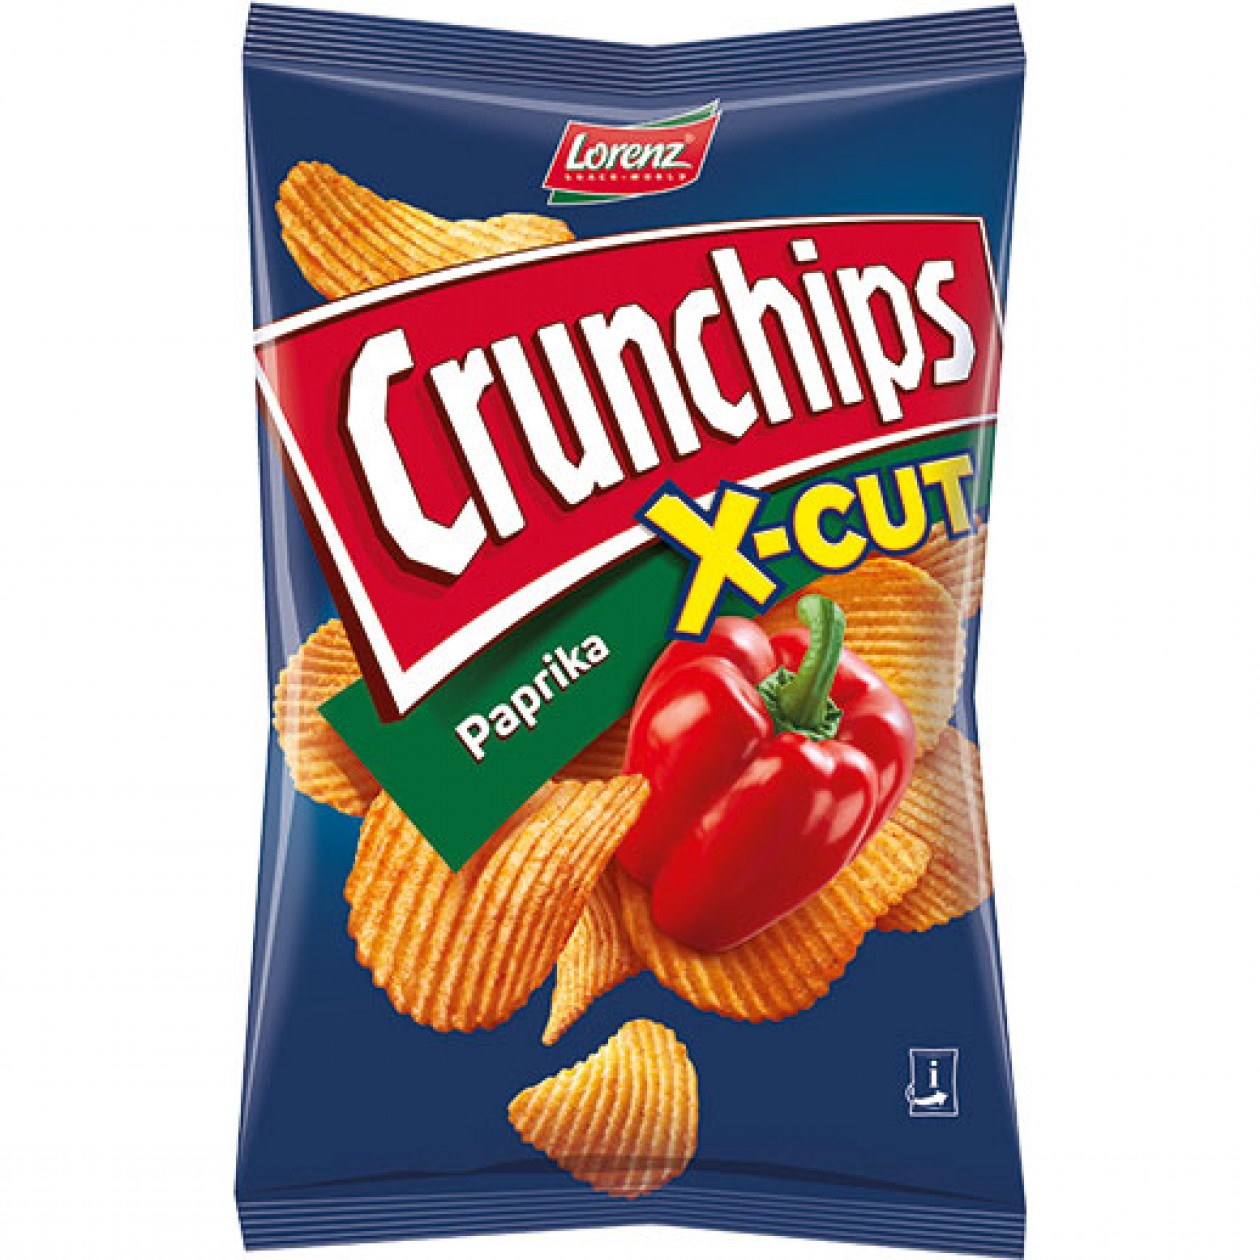 Crisps Crunchips X-Cut Paprika 10x150g